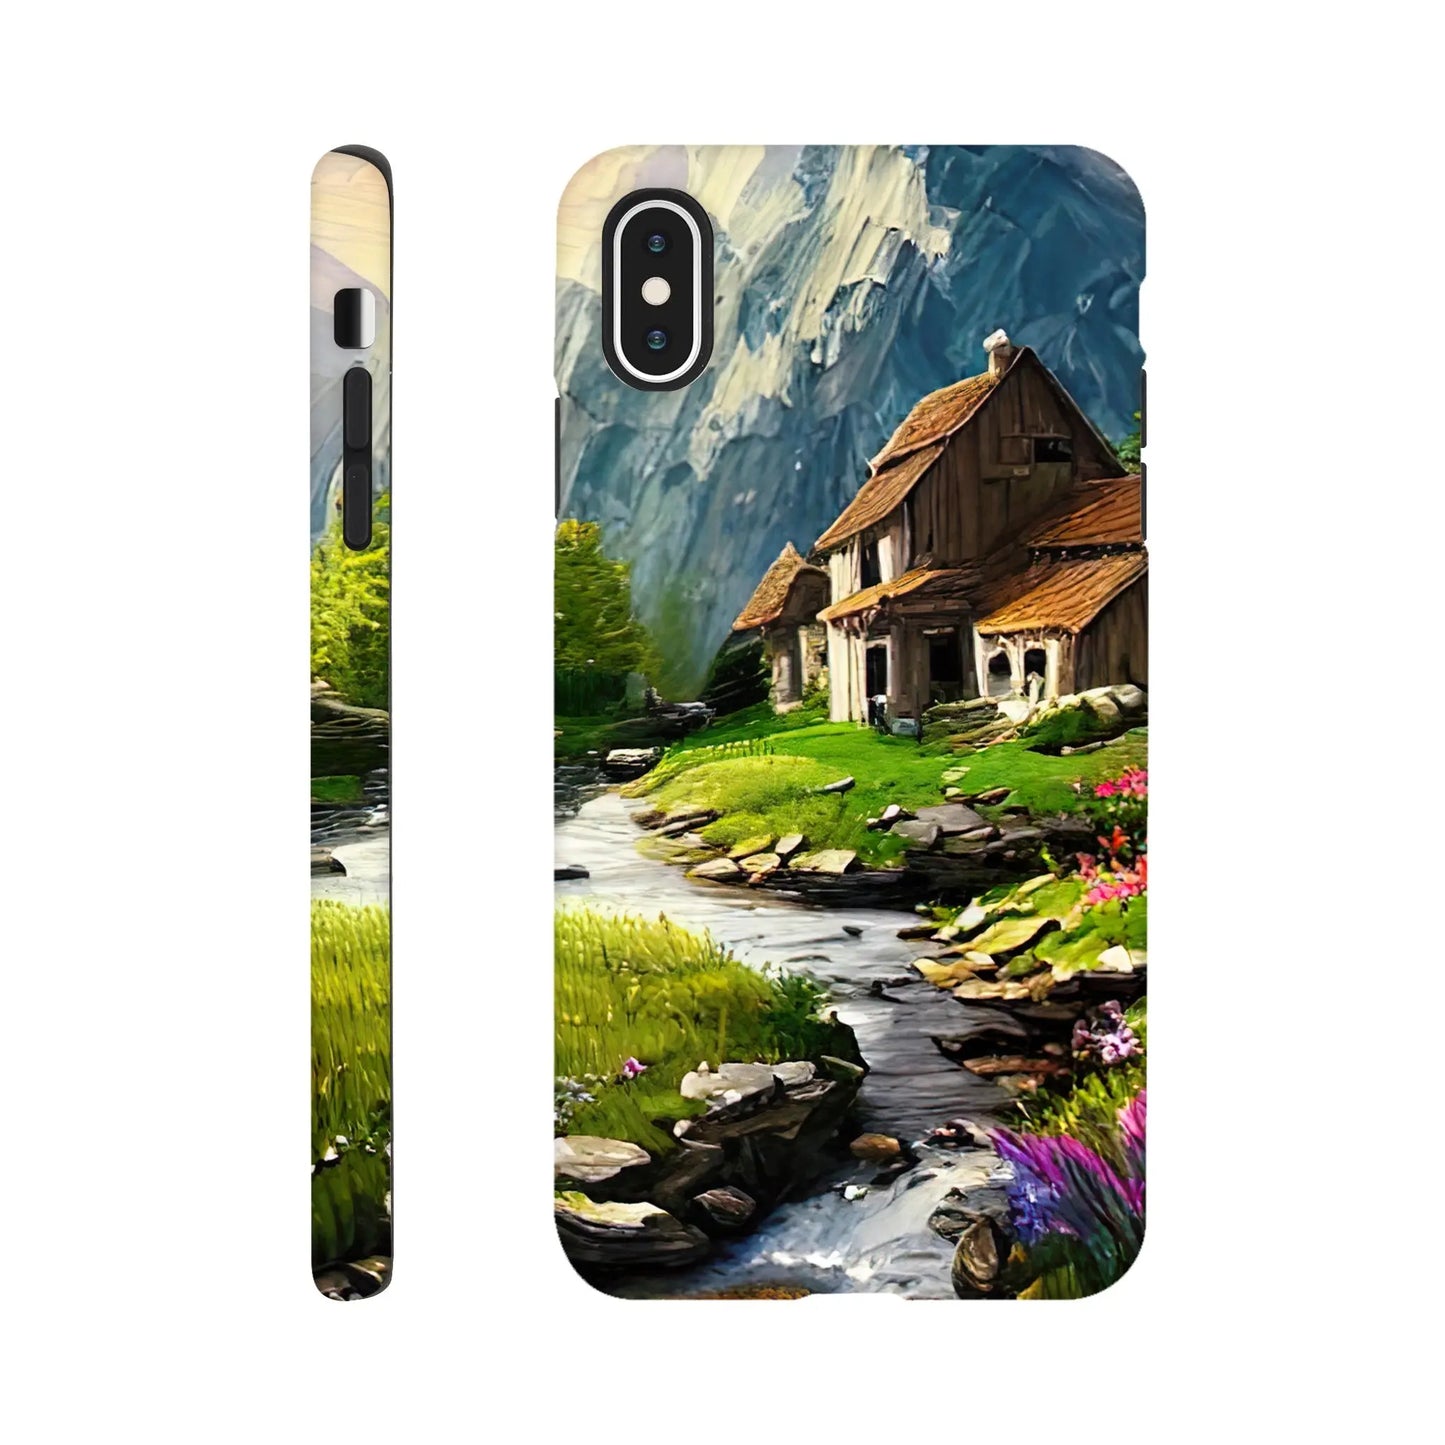 Smartphone-Hülle "Hart" - Berglandschaft - Malerischer Stil, KI-Kunst RolConArt, Landschaften, iPhone-XS-Max